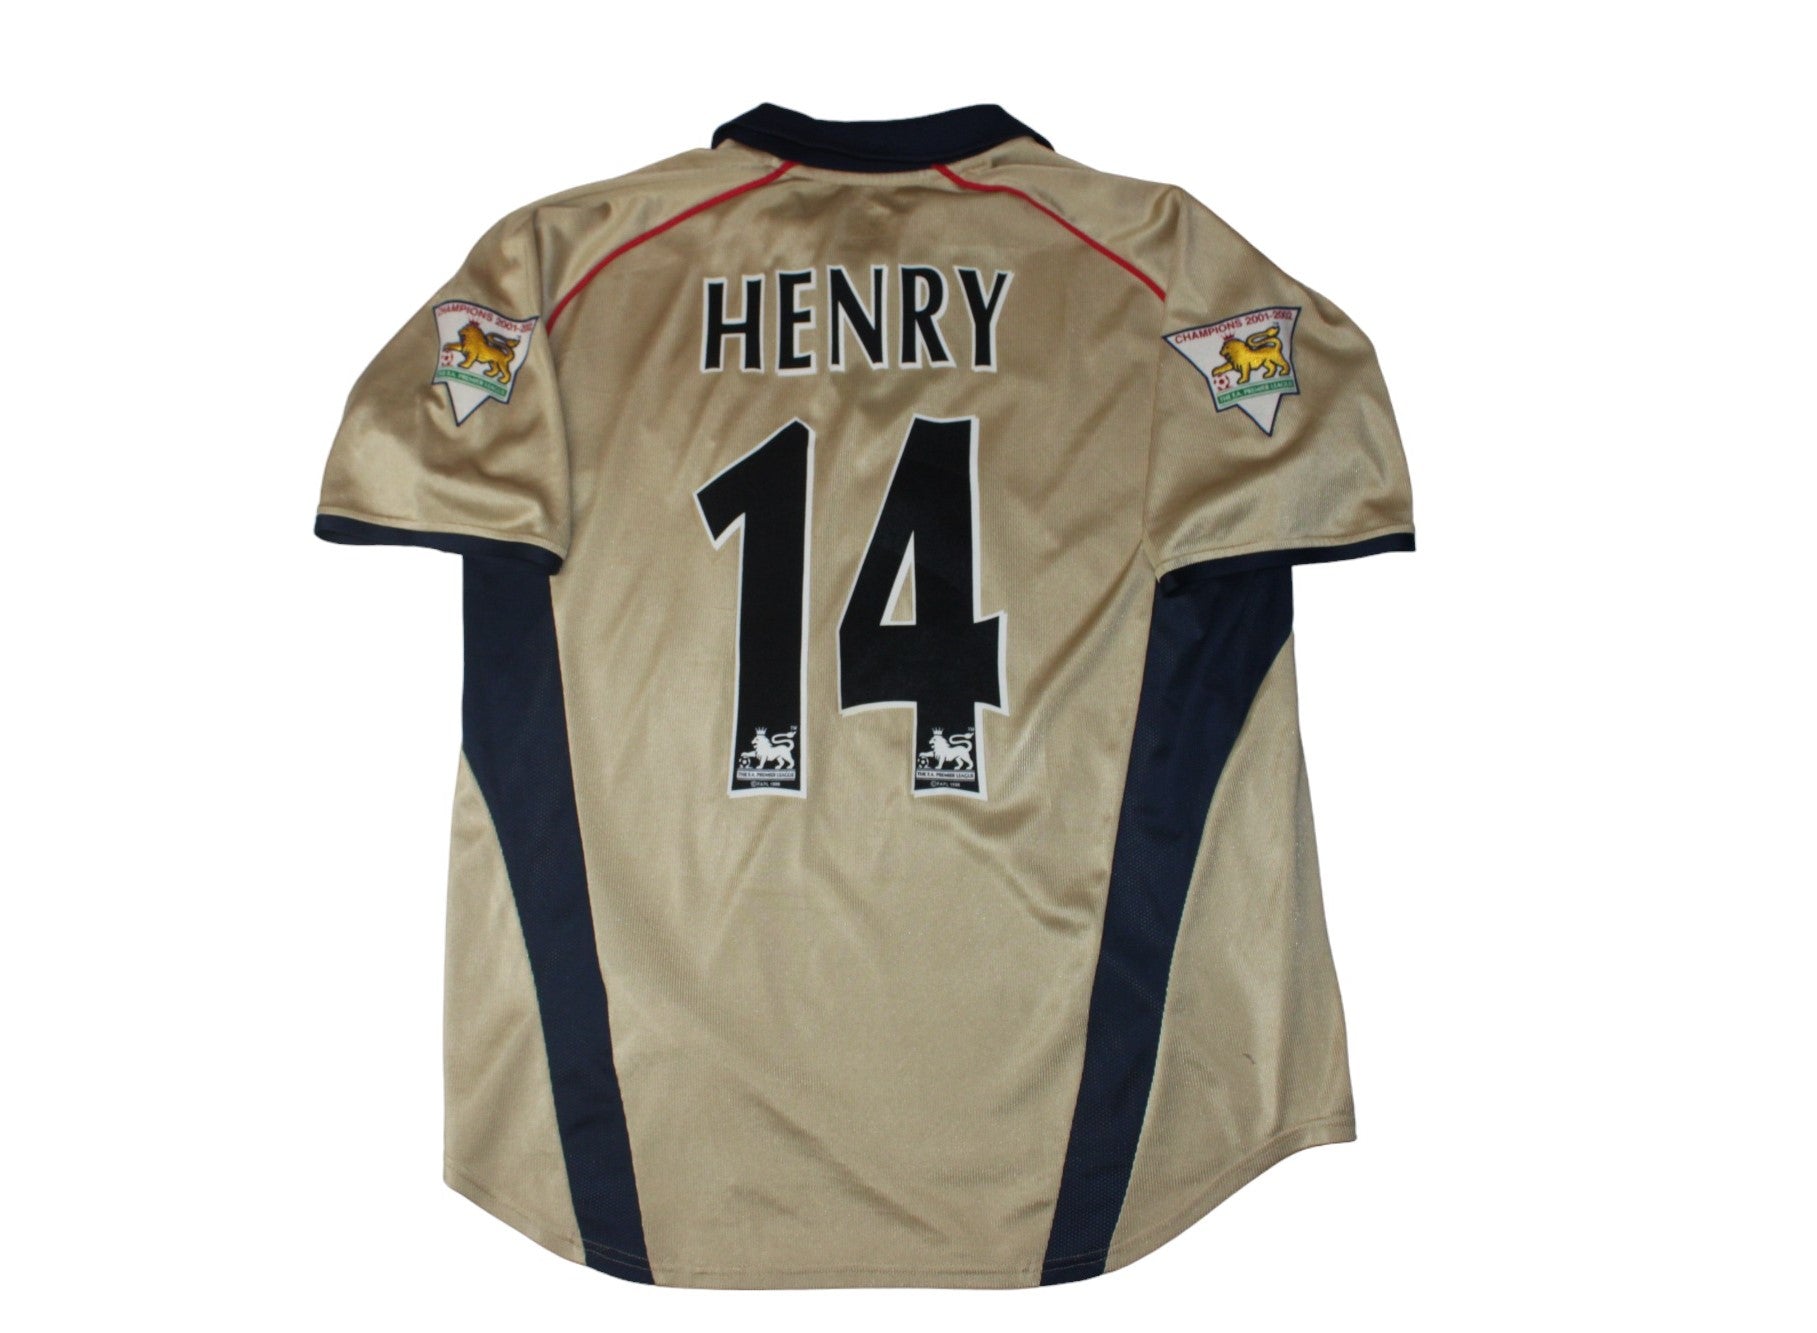 HENRY #14 - ARSENAL 2002/03 THIRD SHIRT - GOLD - 02 - NIKE - SIZE MEDIUM